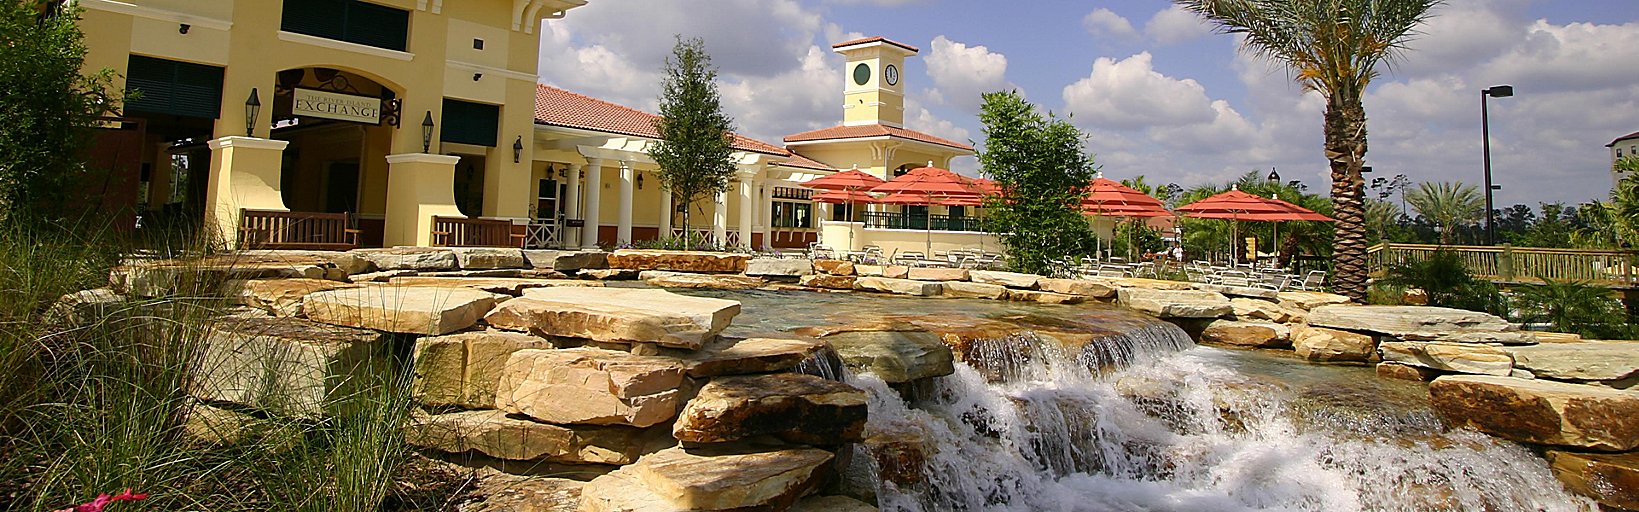 Orlando Hotels With Pools Near Kissimmee, FL | Holiday Inn Club Vacation At Orange  Lake Resort